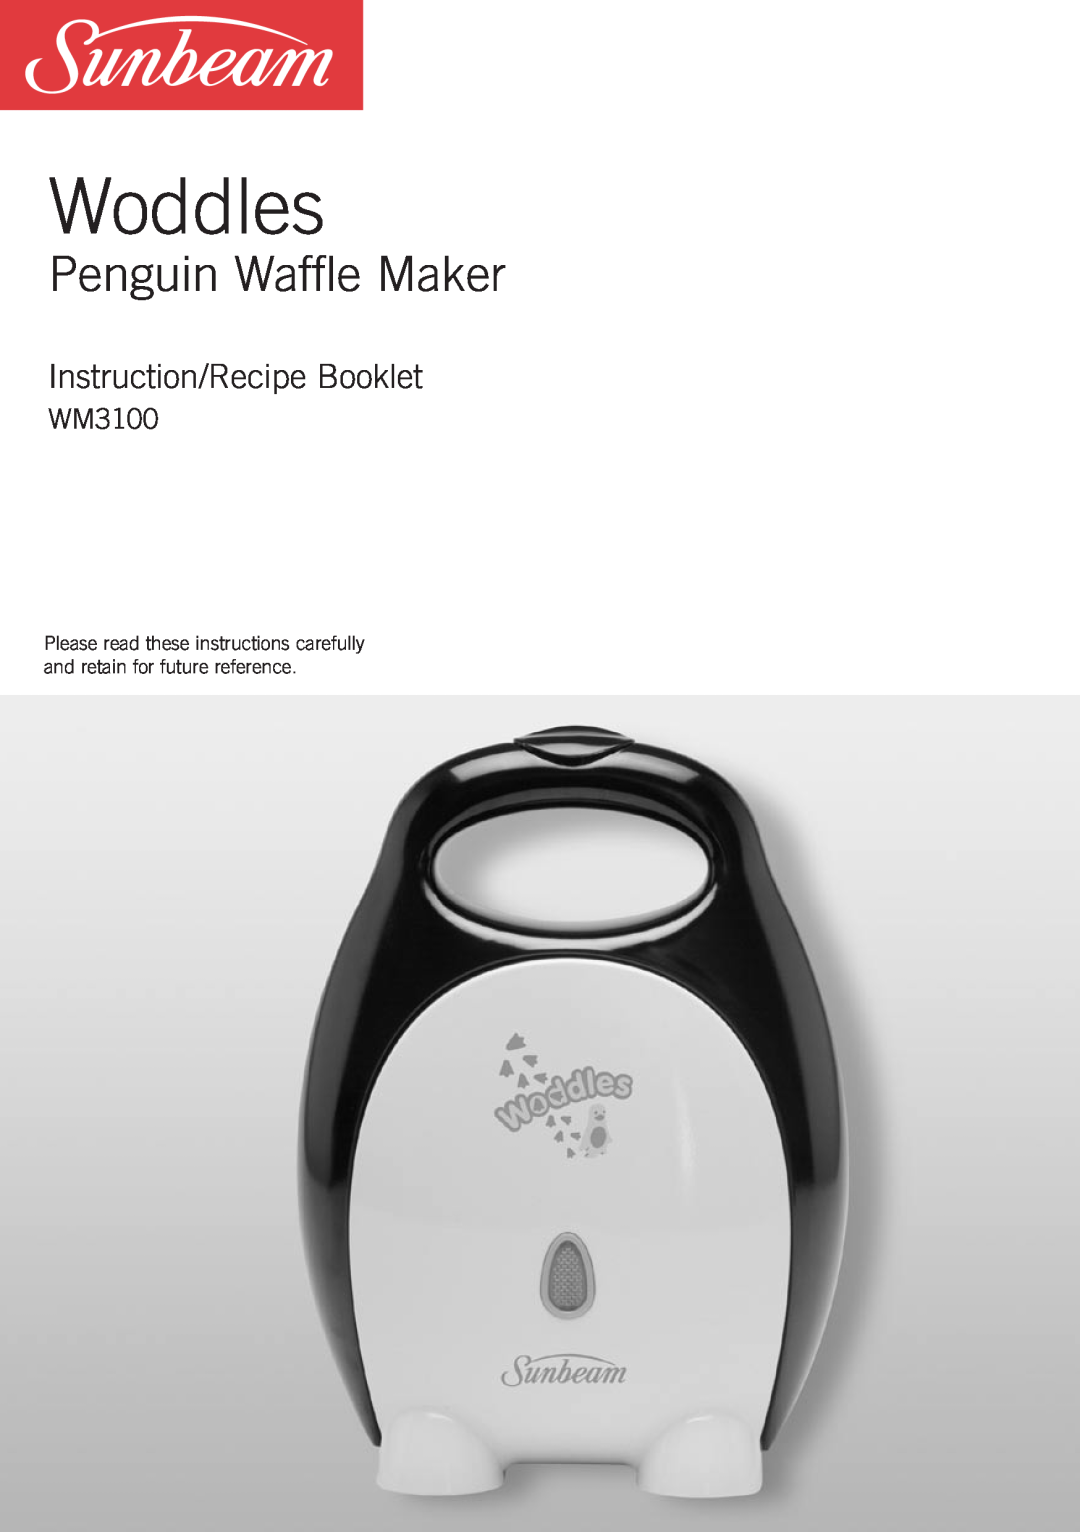 Sunbeam WM3100 manual Woddles, Penguin Waffle Maker, Instruction/Recipe Booklet 